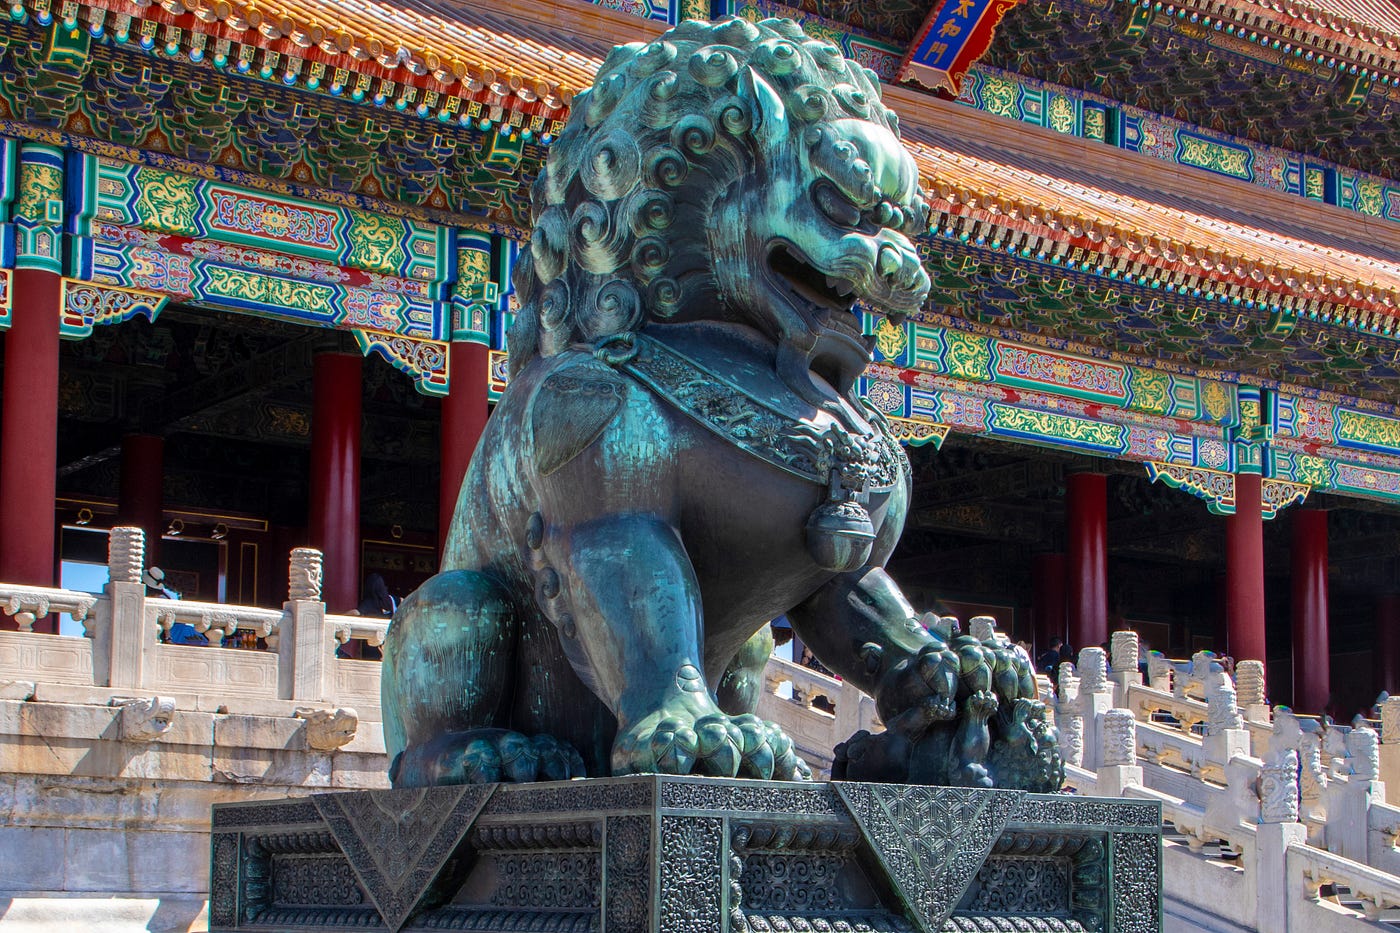 Independent Beijing Forbidden City Photography Tour